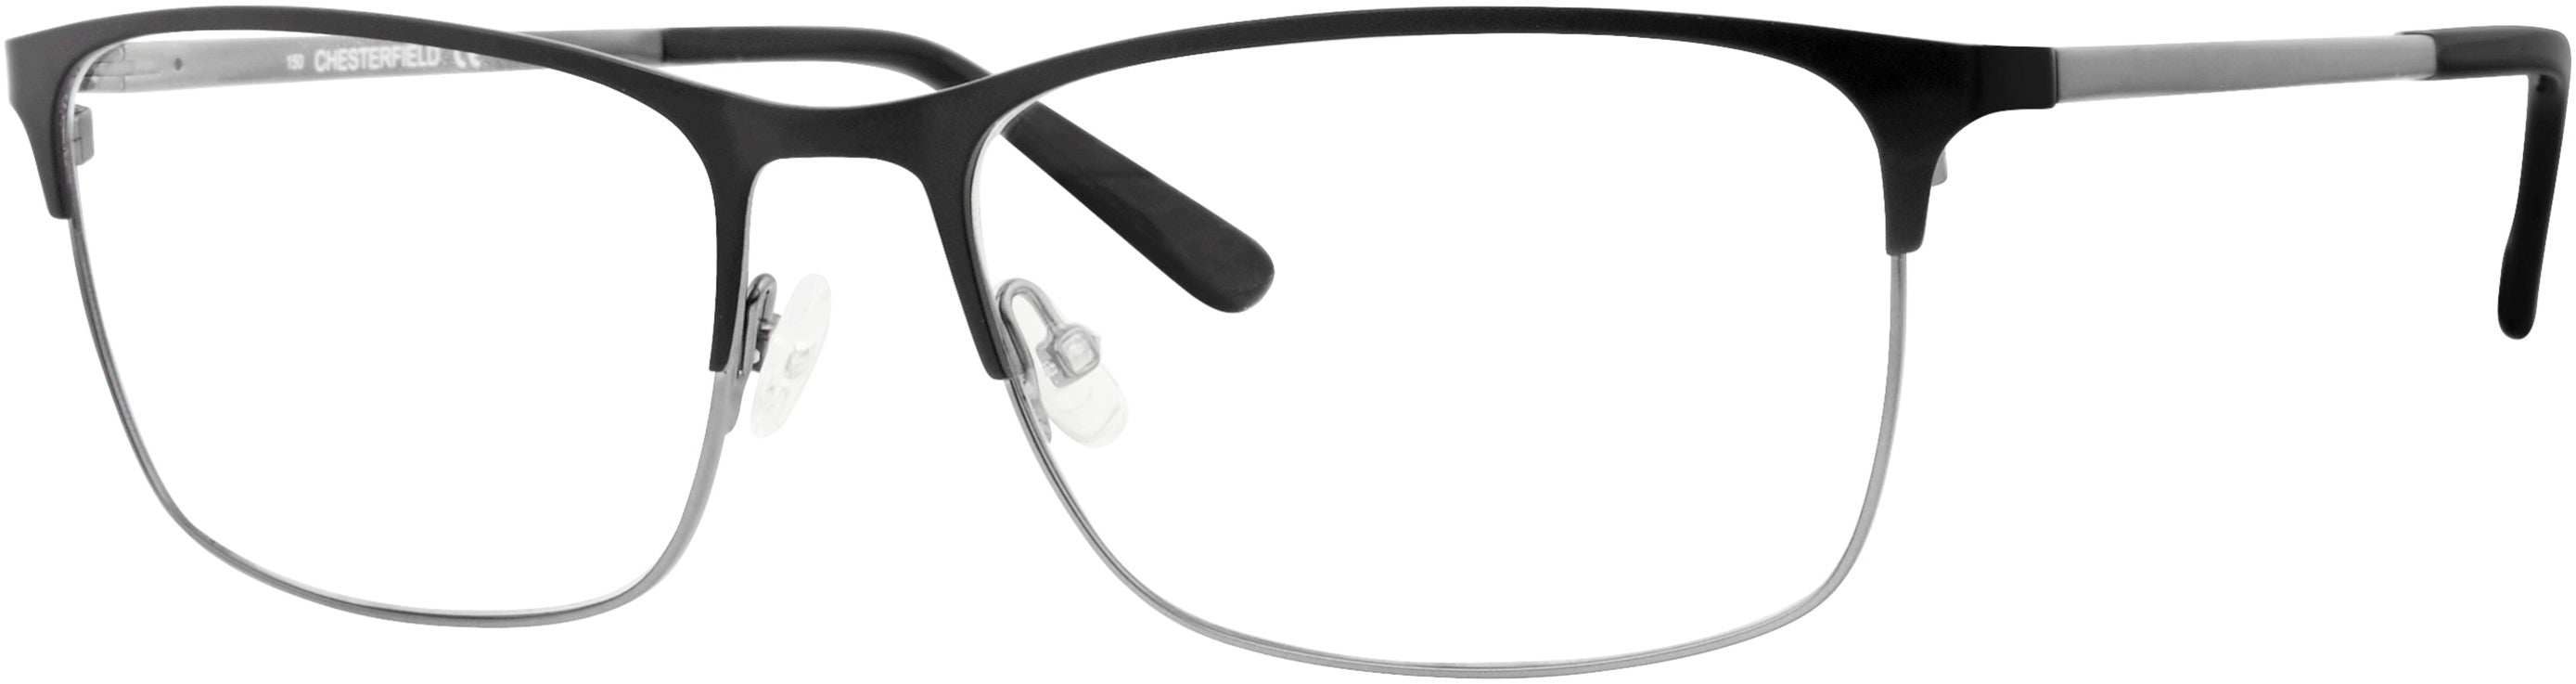  Chesterfield 63XL Rectangular Eyeglasses 0TI7-0TI7  Ruthenium Matte Black (00 Demo Lens)